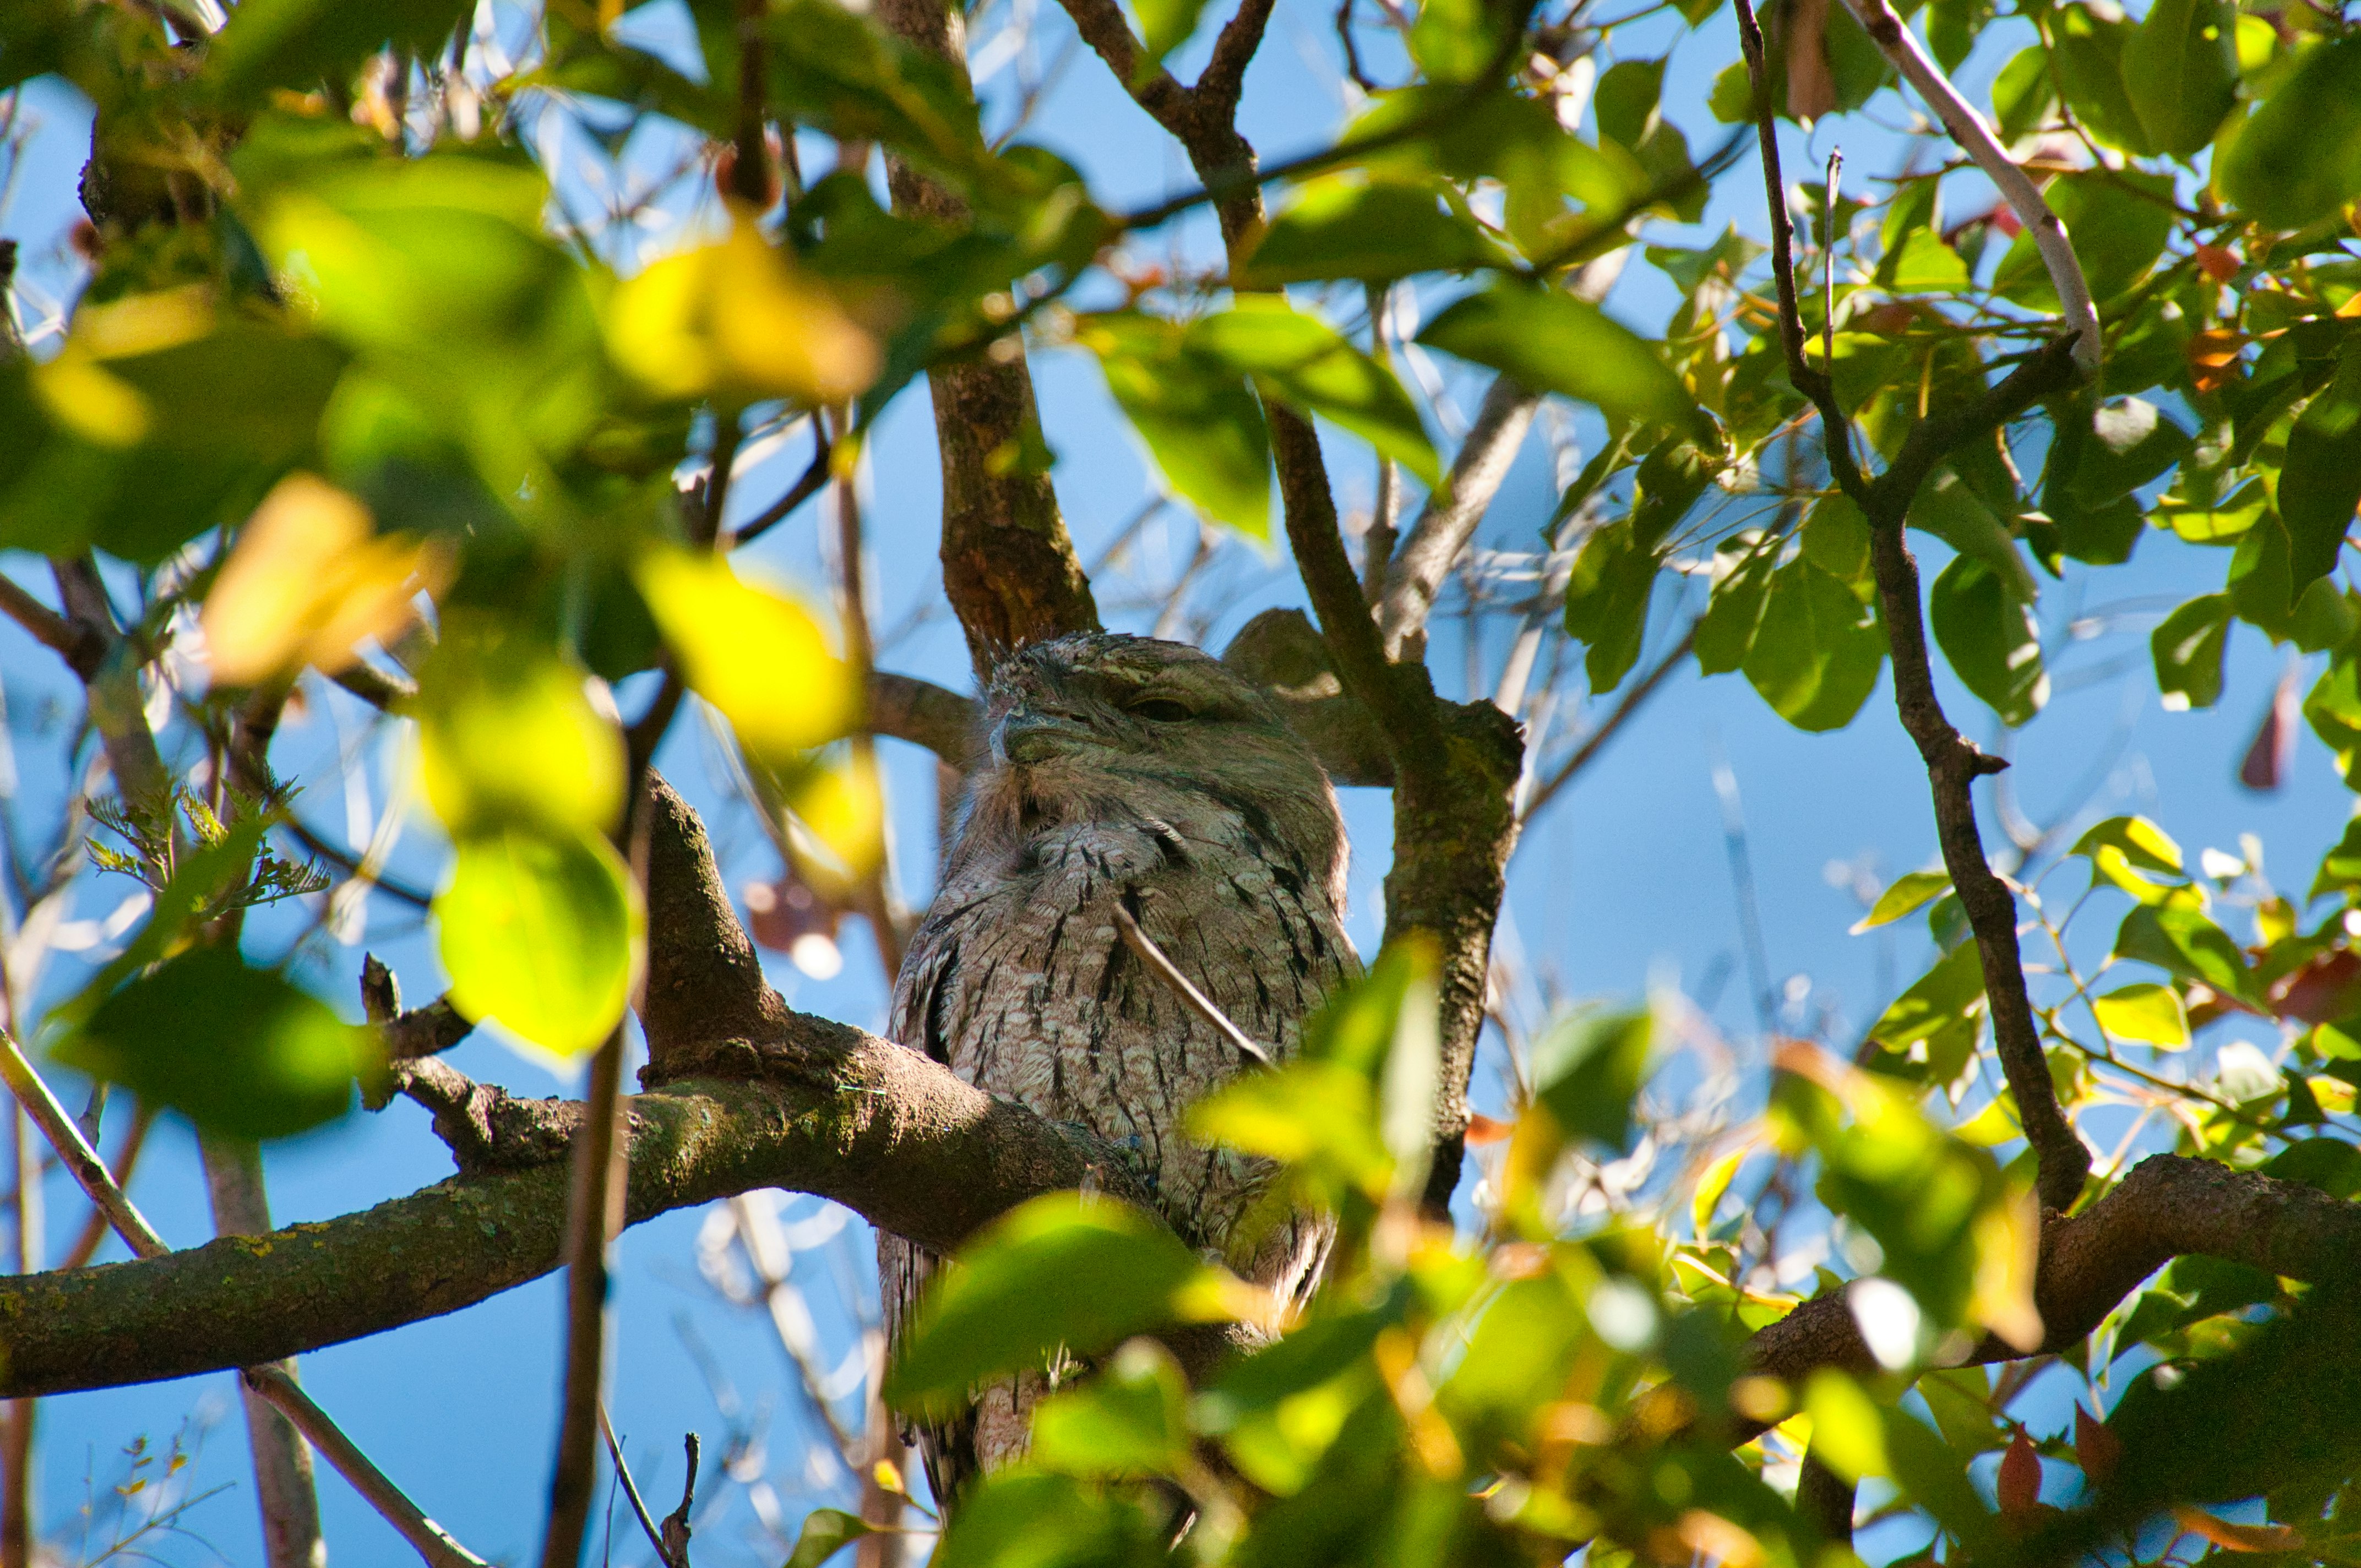 Tawny frogmouth owl in a suburban garden